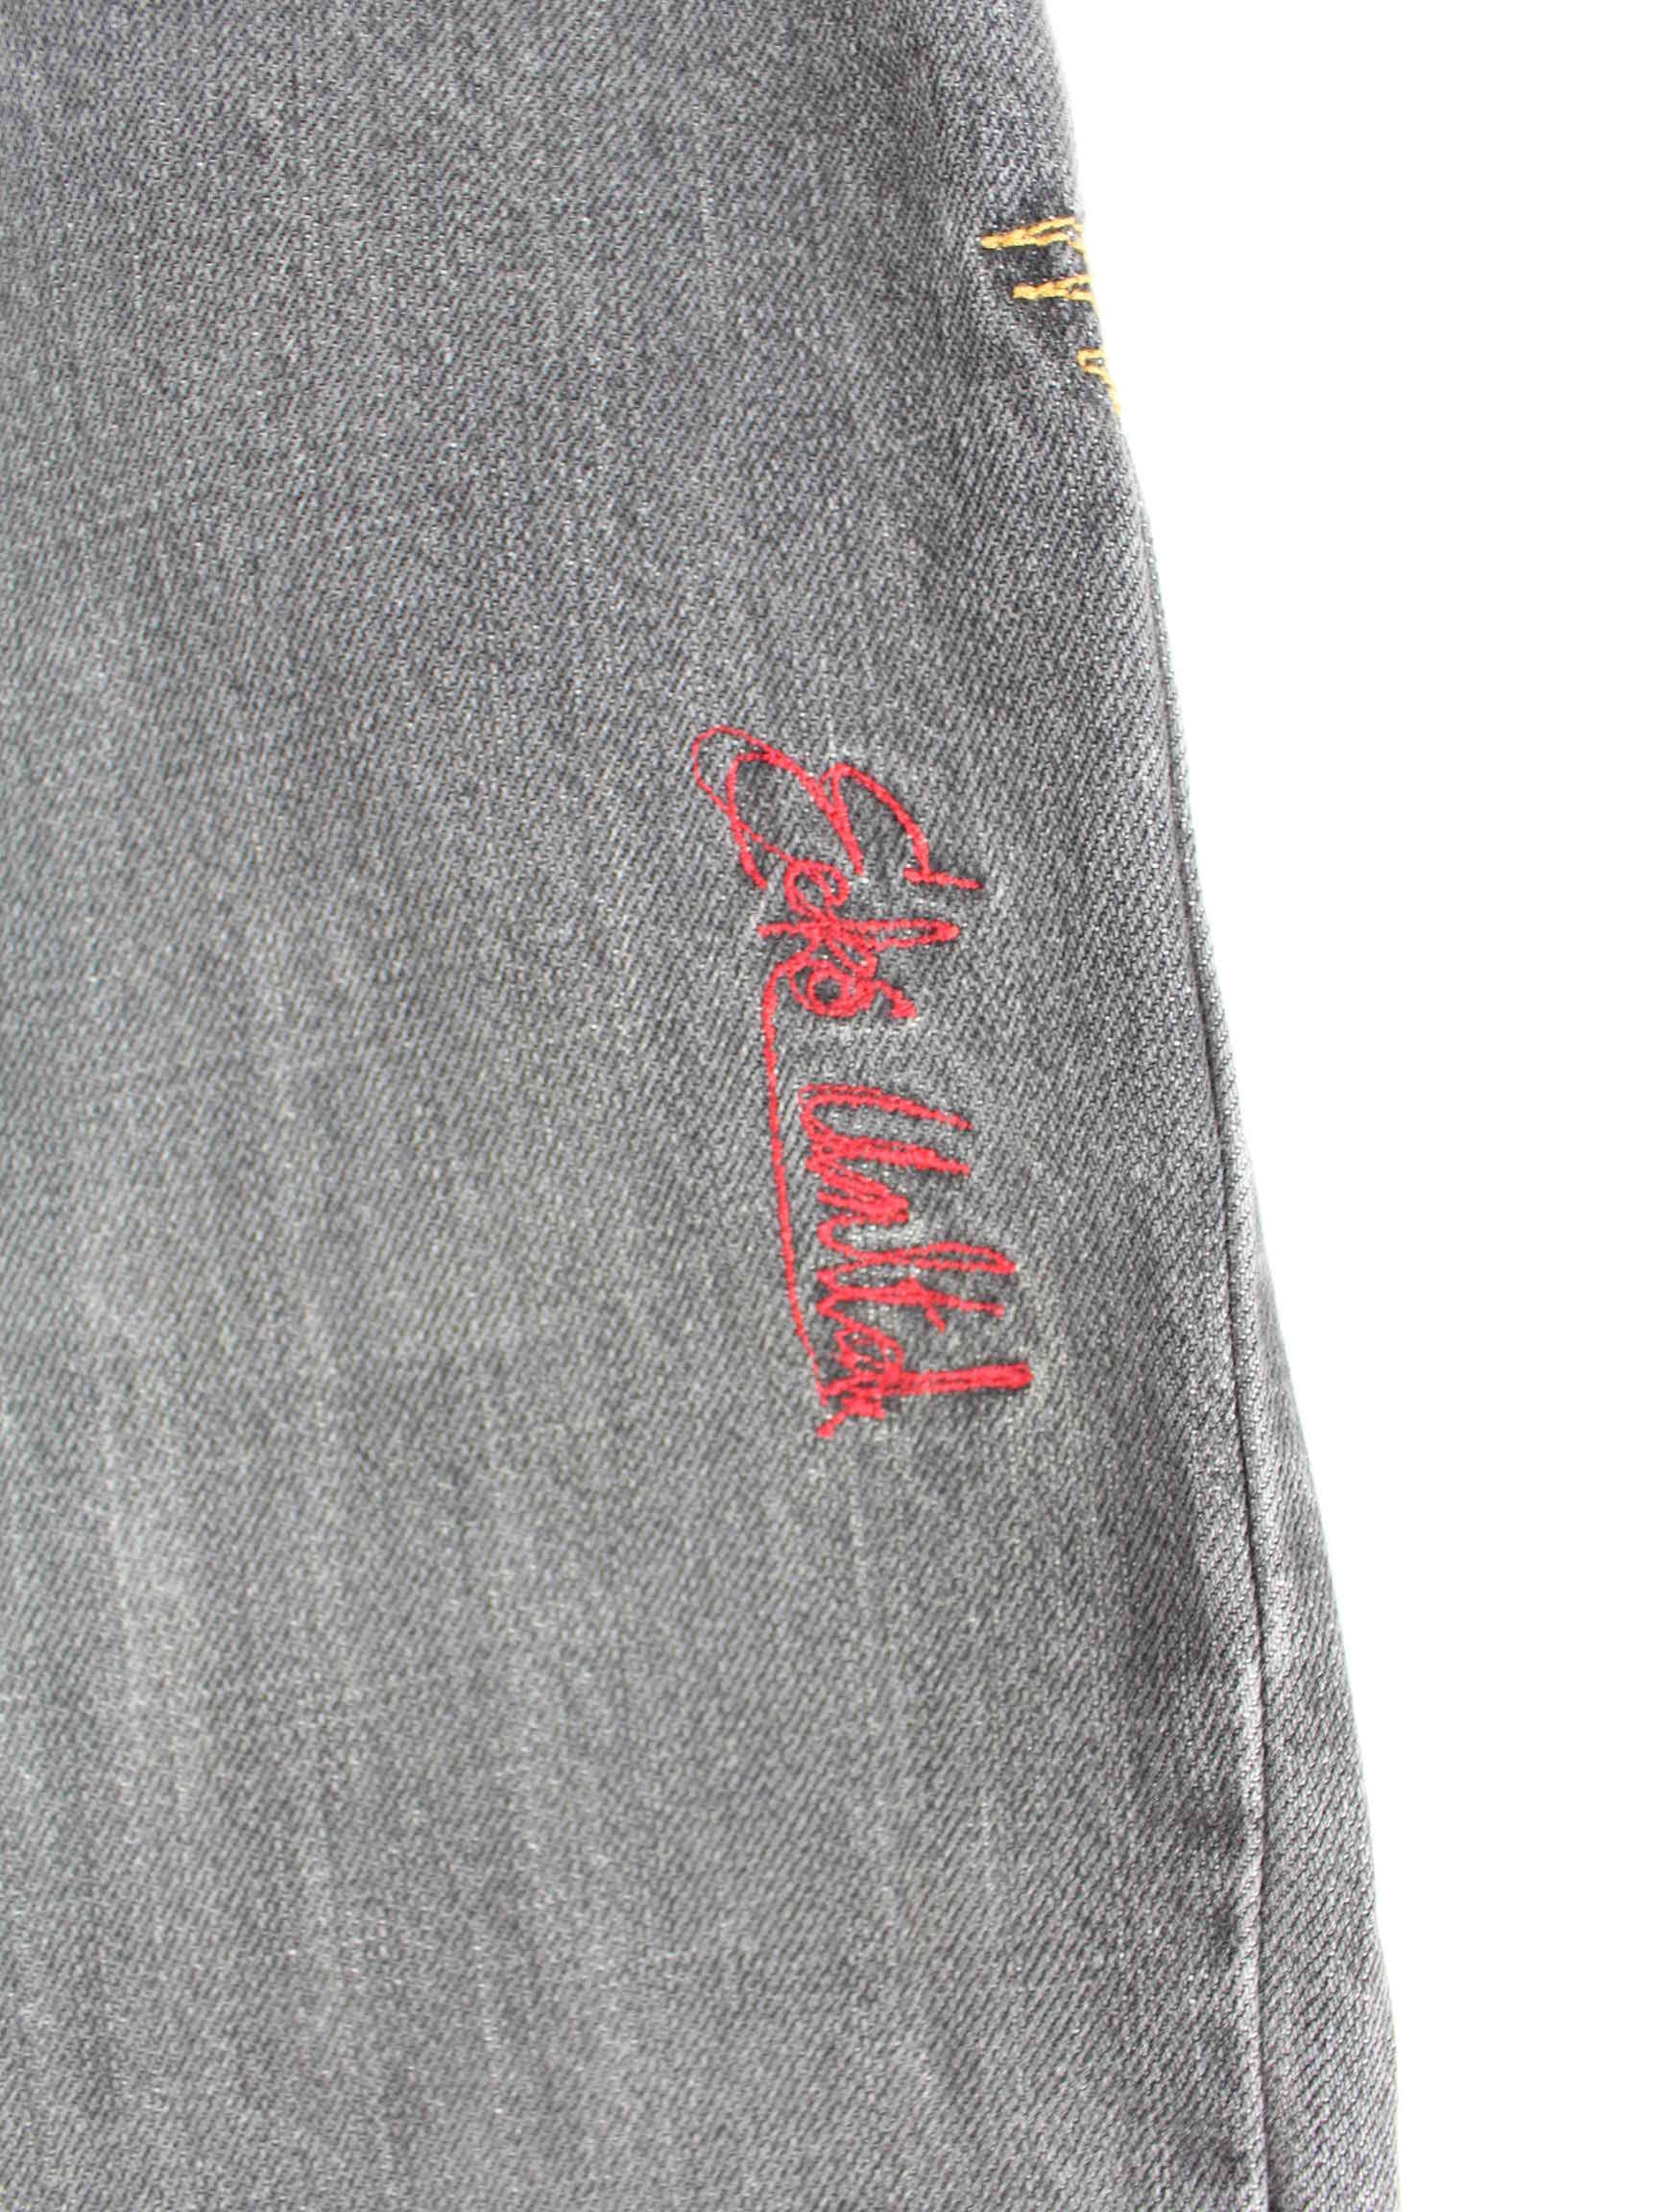 Ecko y2k Embroidered Jeans Grau W28 L30 (detail image 2)